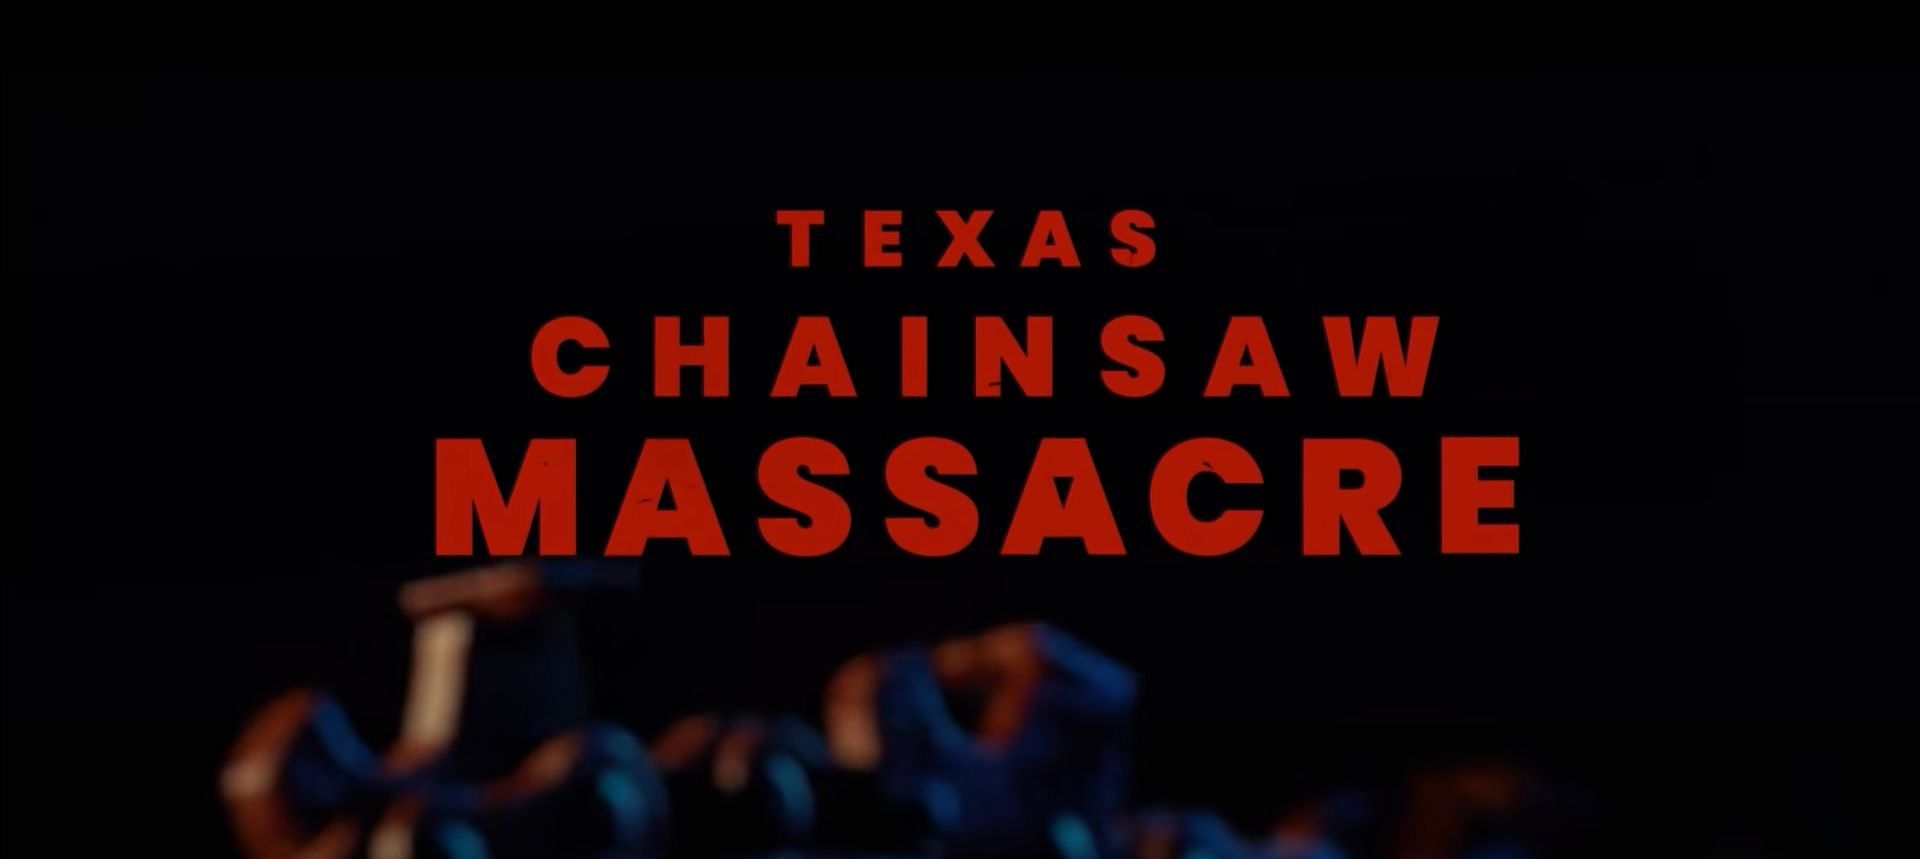 Texas Chainsaw Massacre (Image via Netflix)